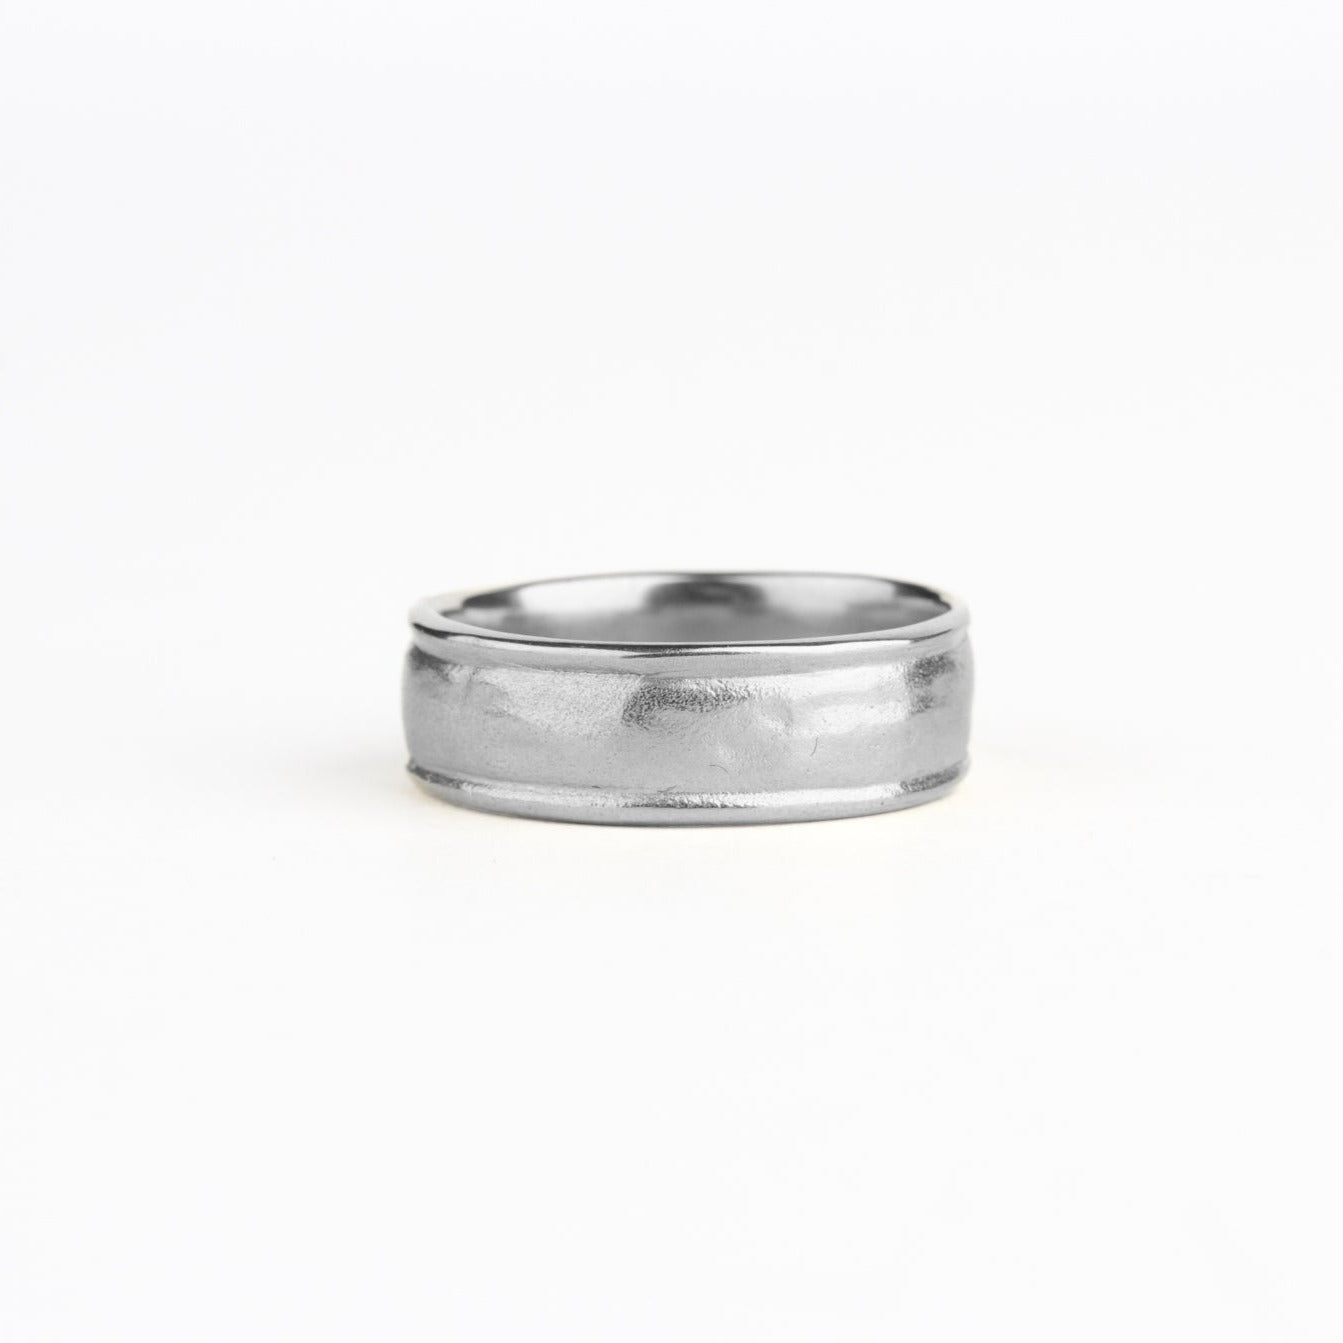 Minoan men's ring